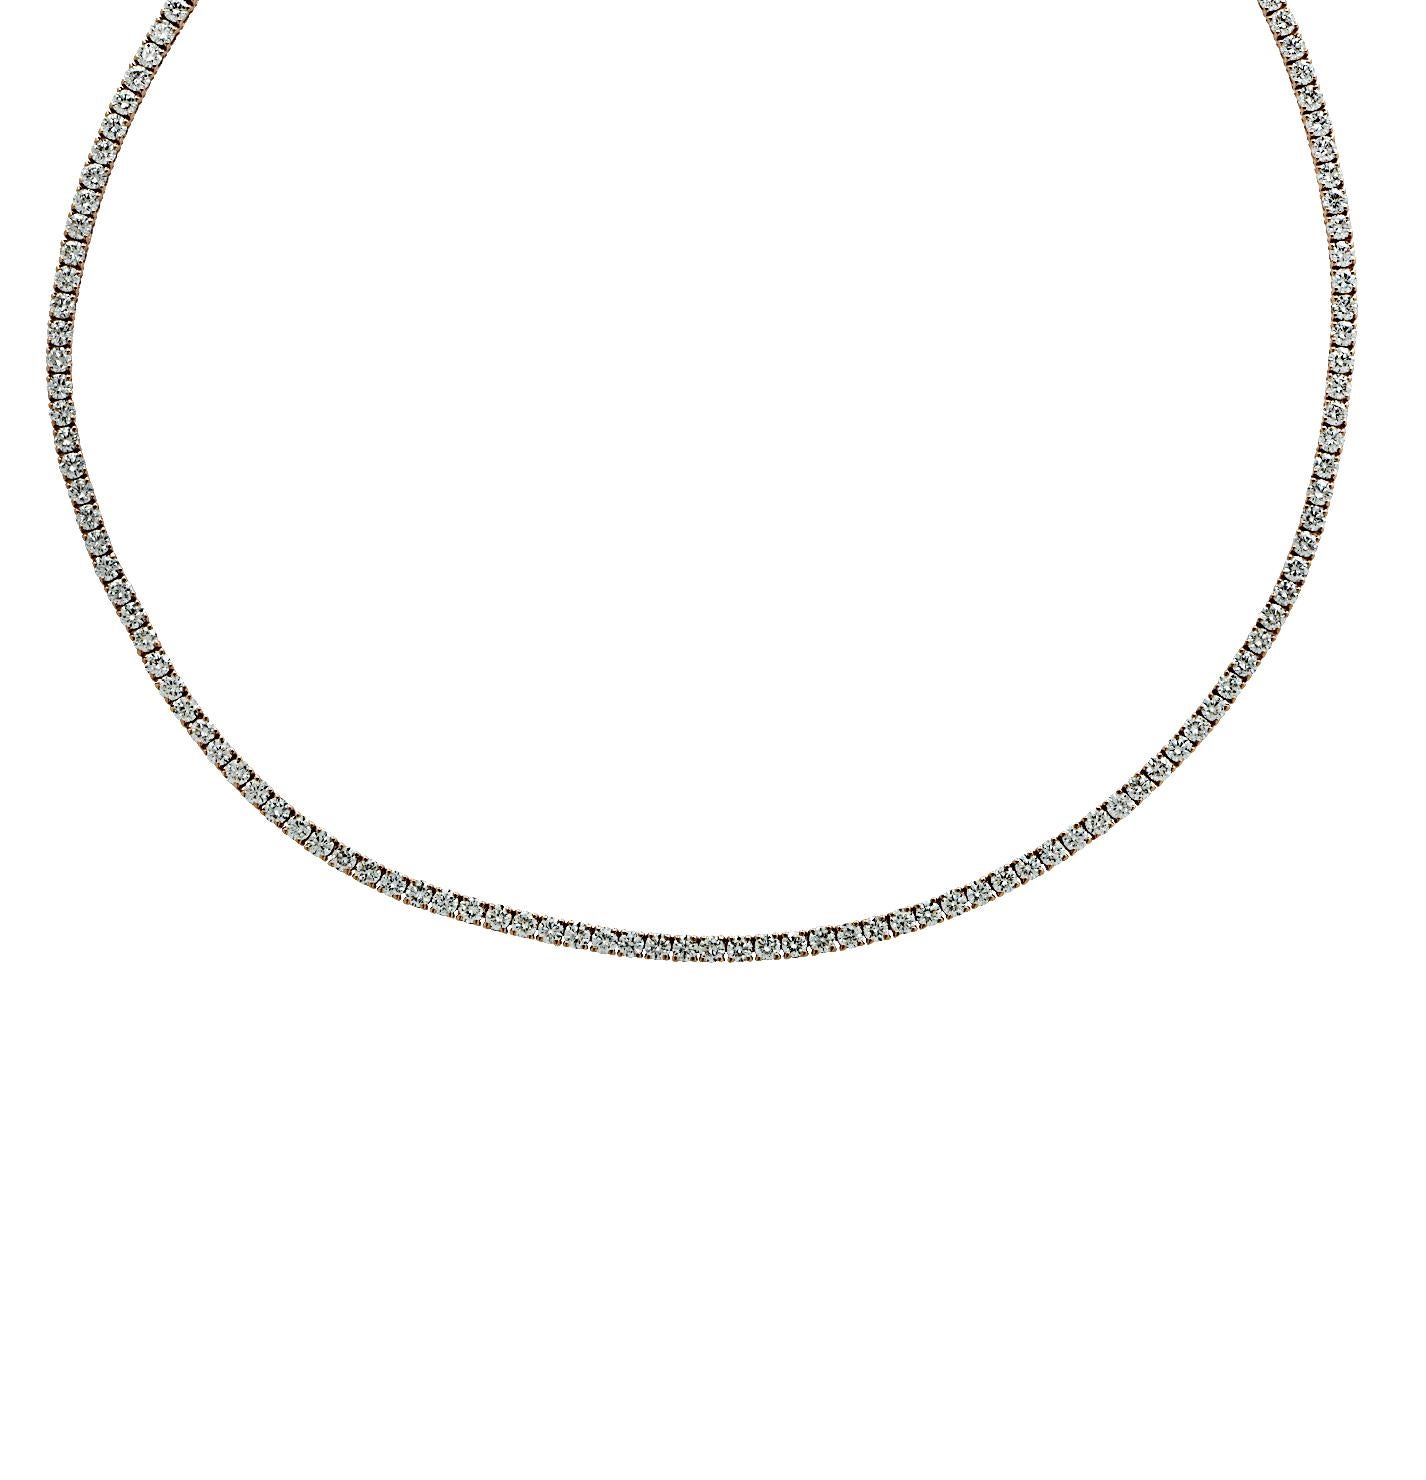 Vivid Diamonds 5.96 Carat Diamond Straight Line Rose Gold Necklace In New Condition For Sale In Miami, FL